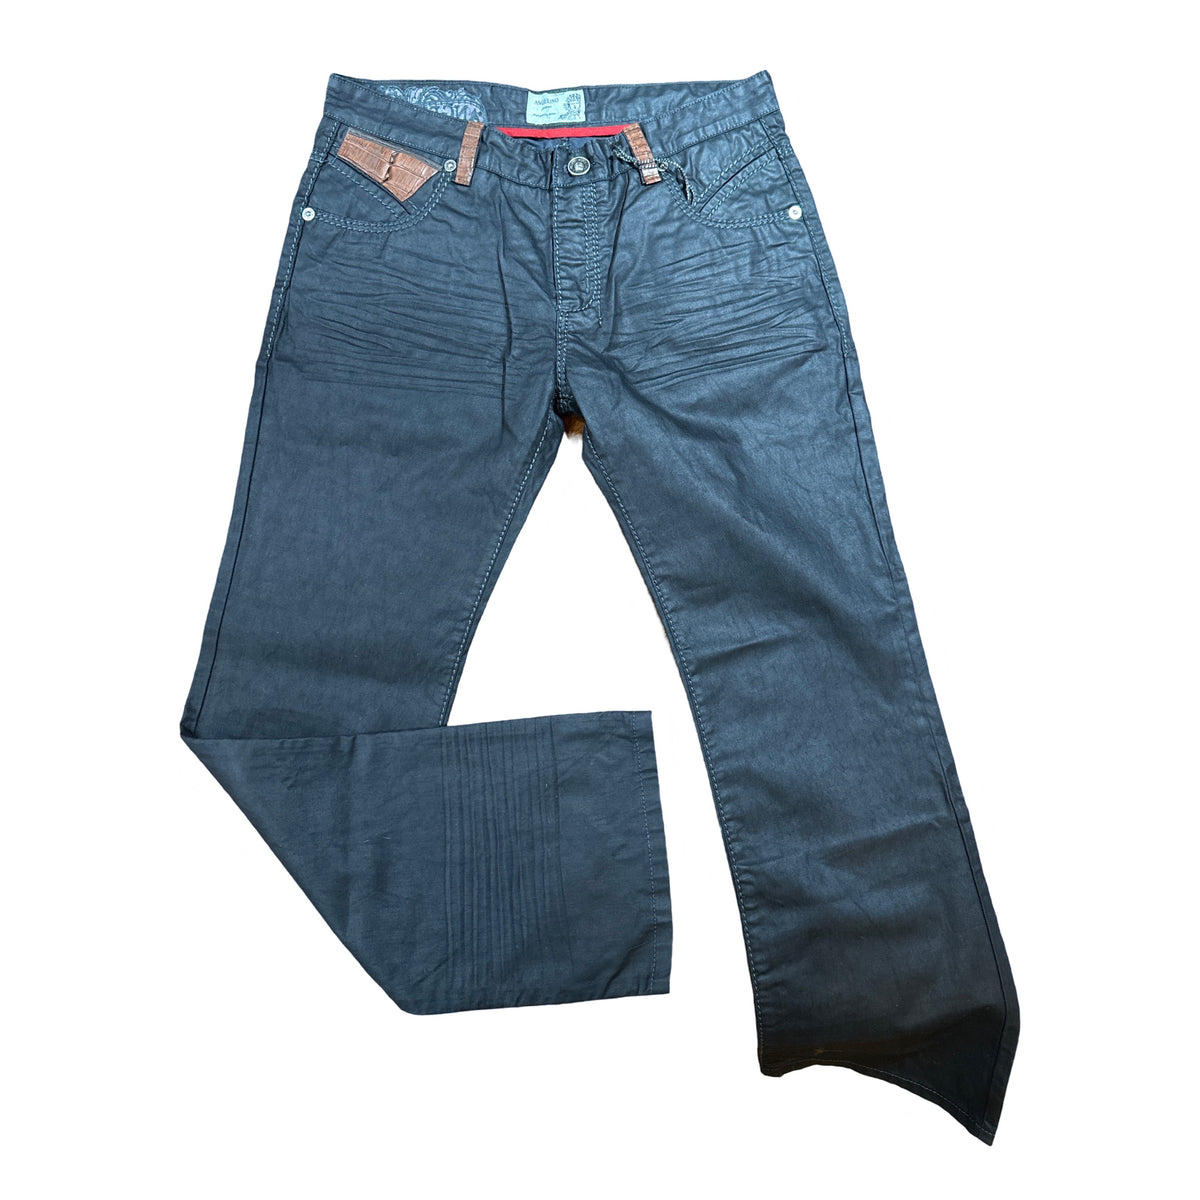 Kashani x Angelino Jeans w/ Brown Alligator Tail Pockets - Dudes Boutique